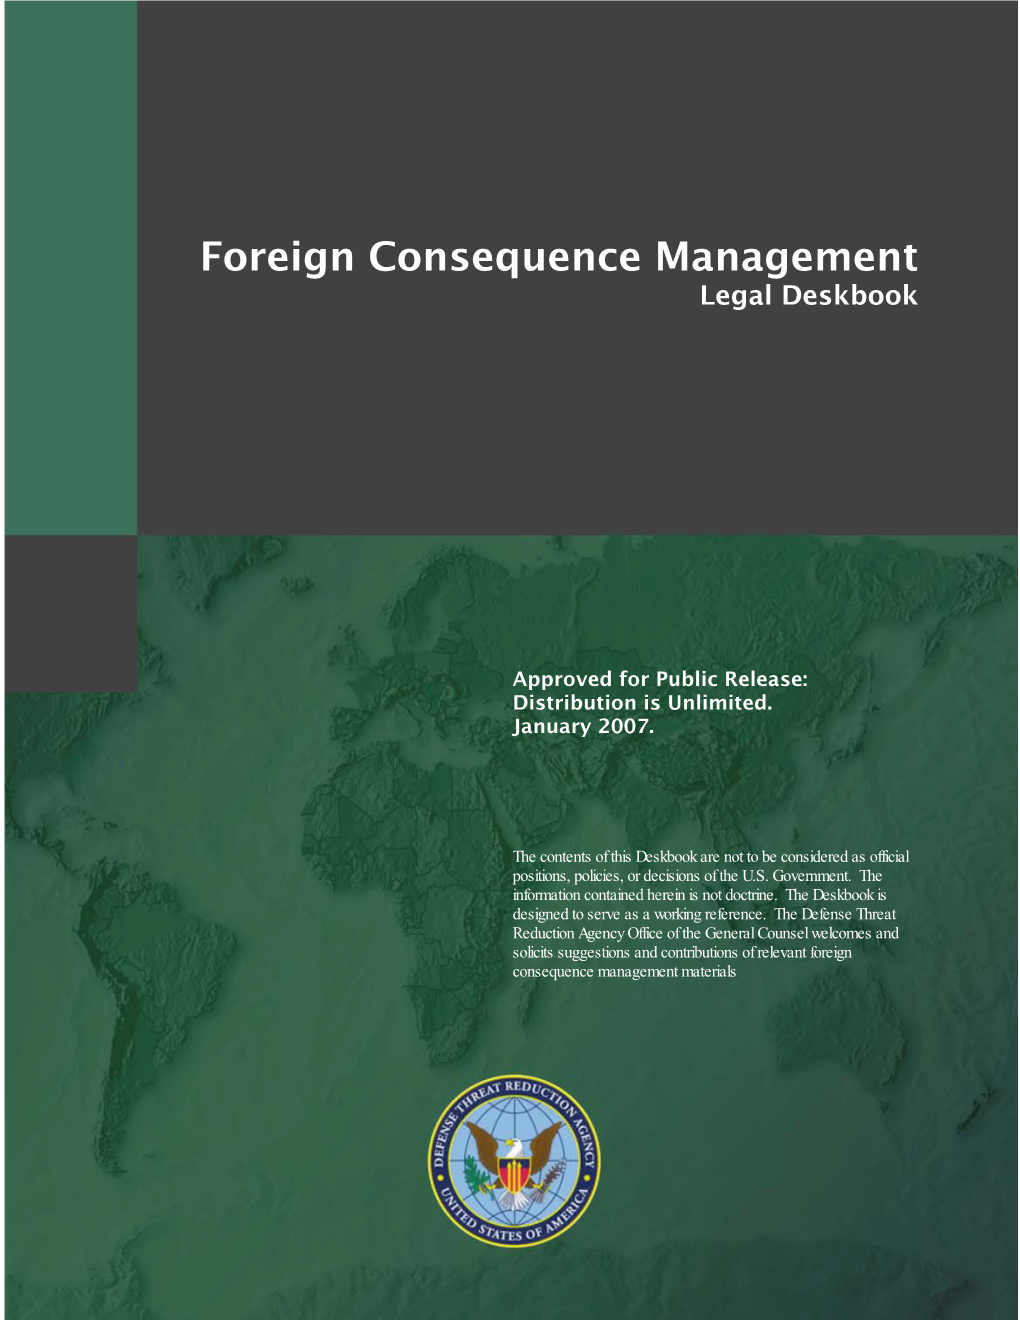 Foreign Consequence Management Legal Deskbook